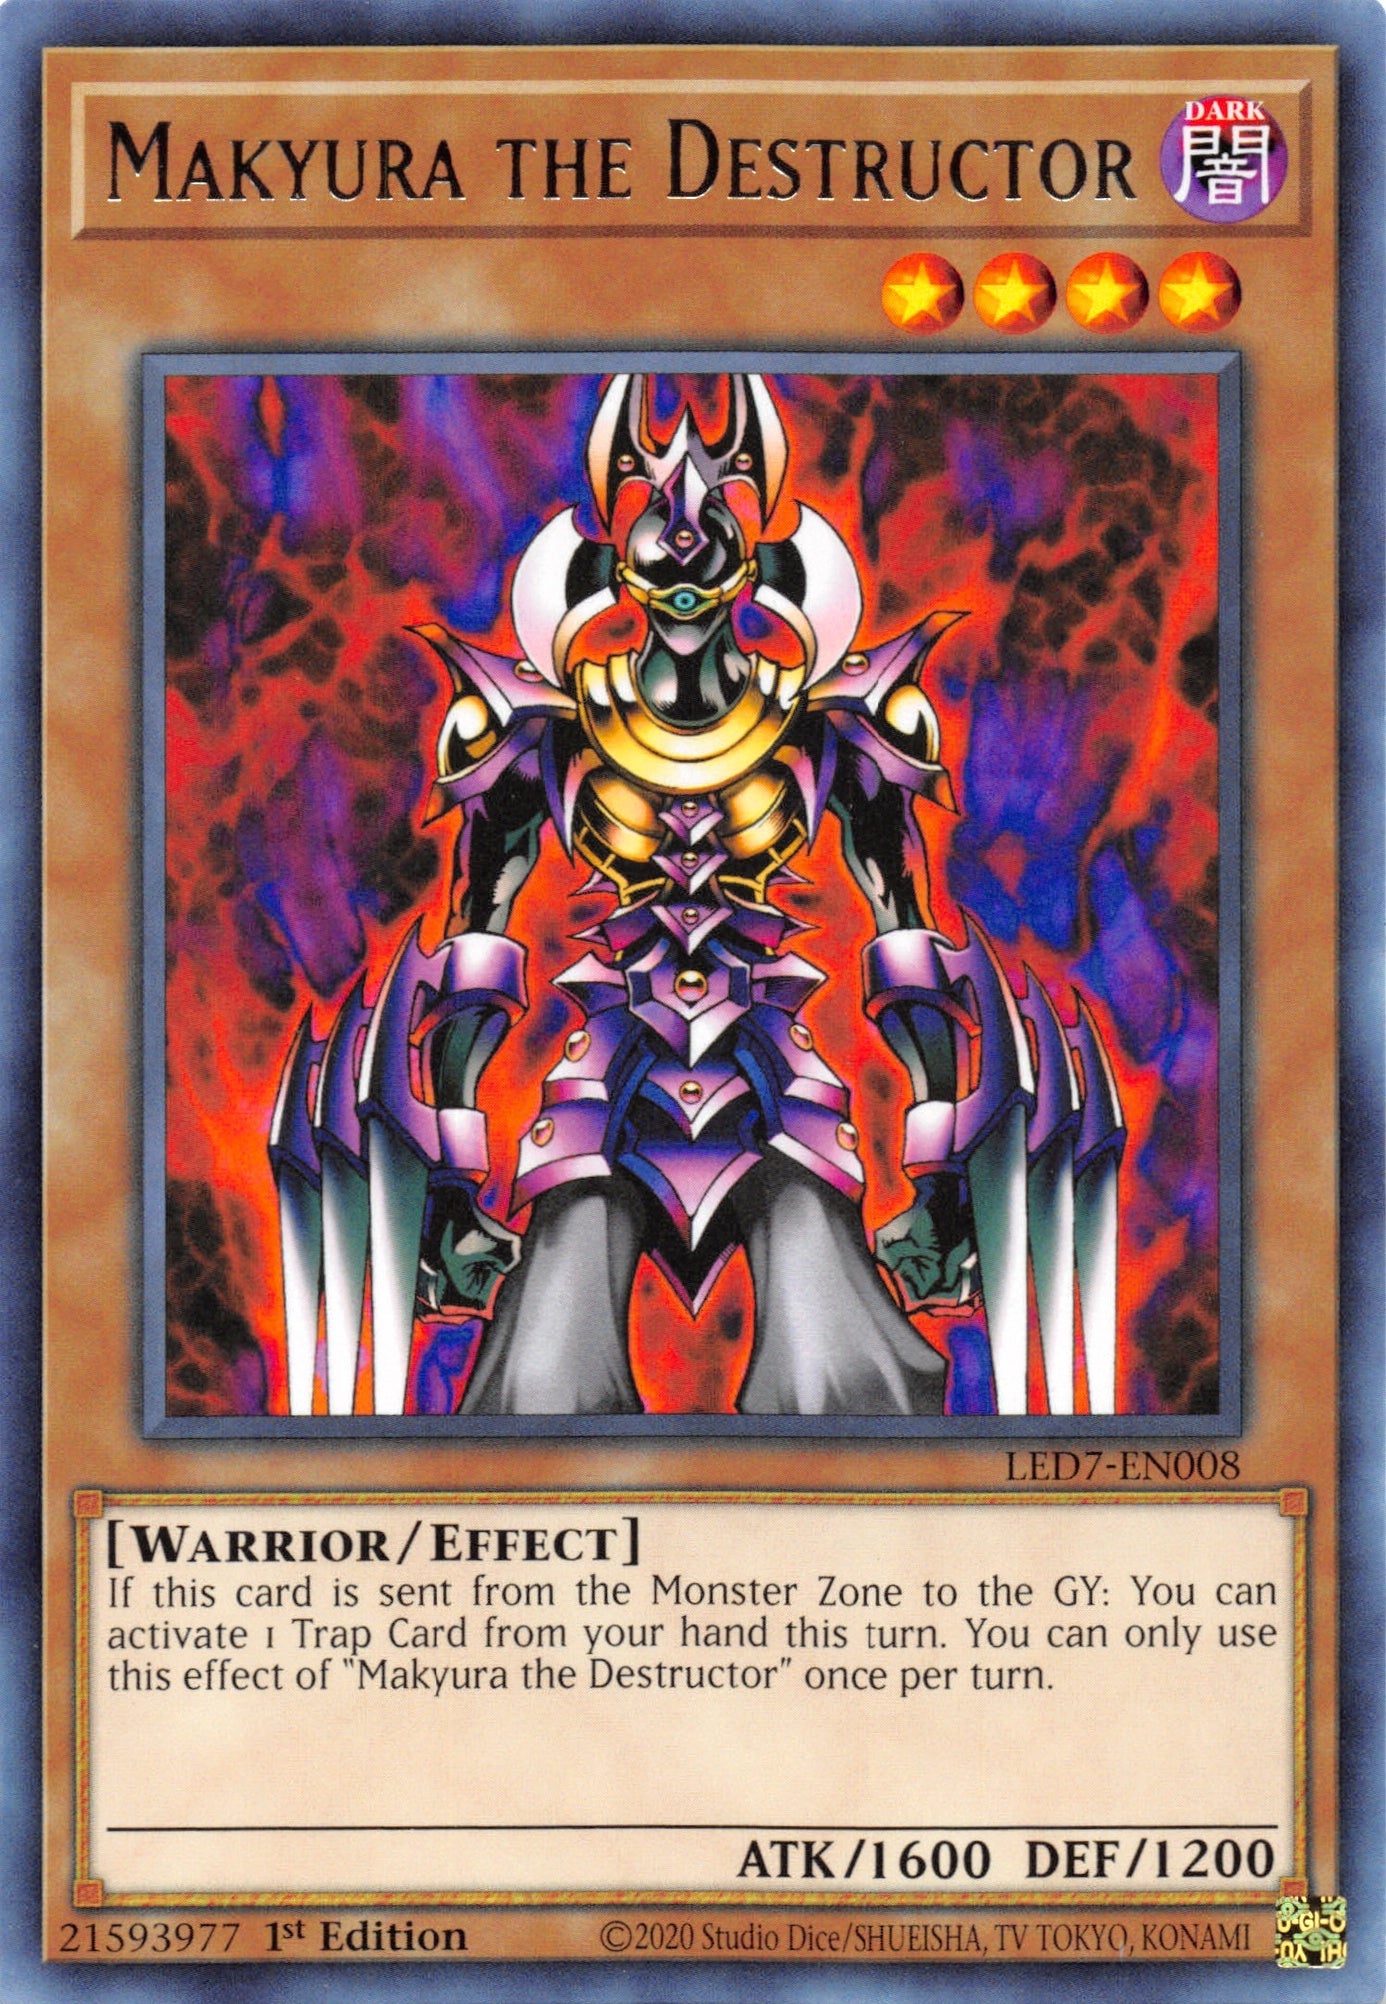 Makyura the Destructor [LED7-EN008] Rare